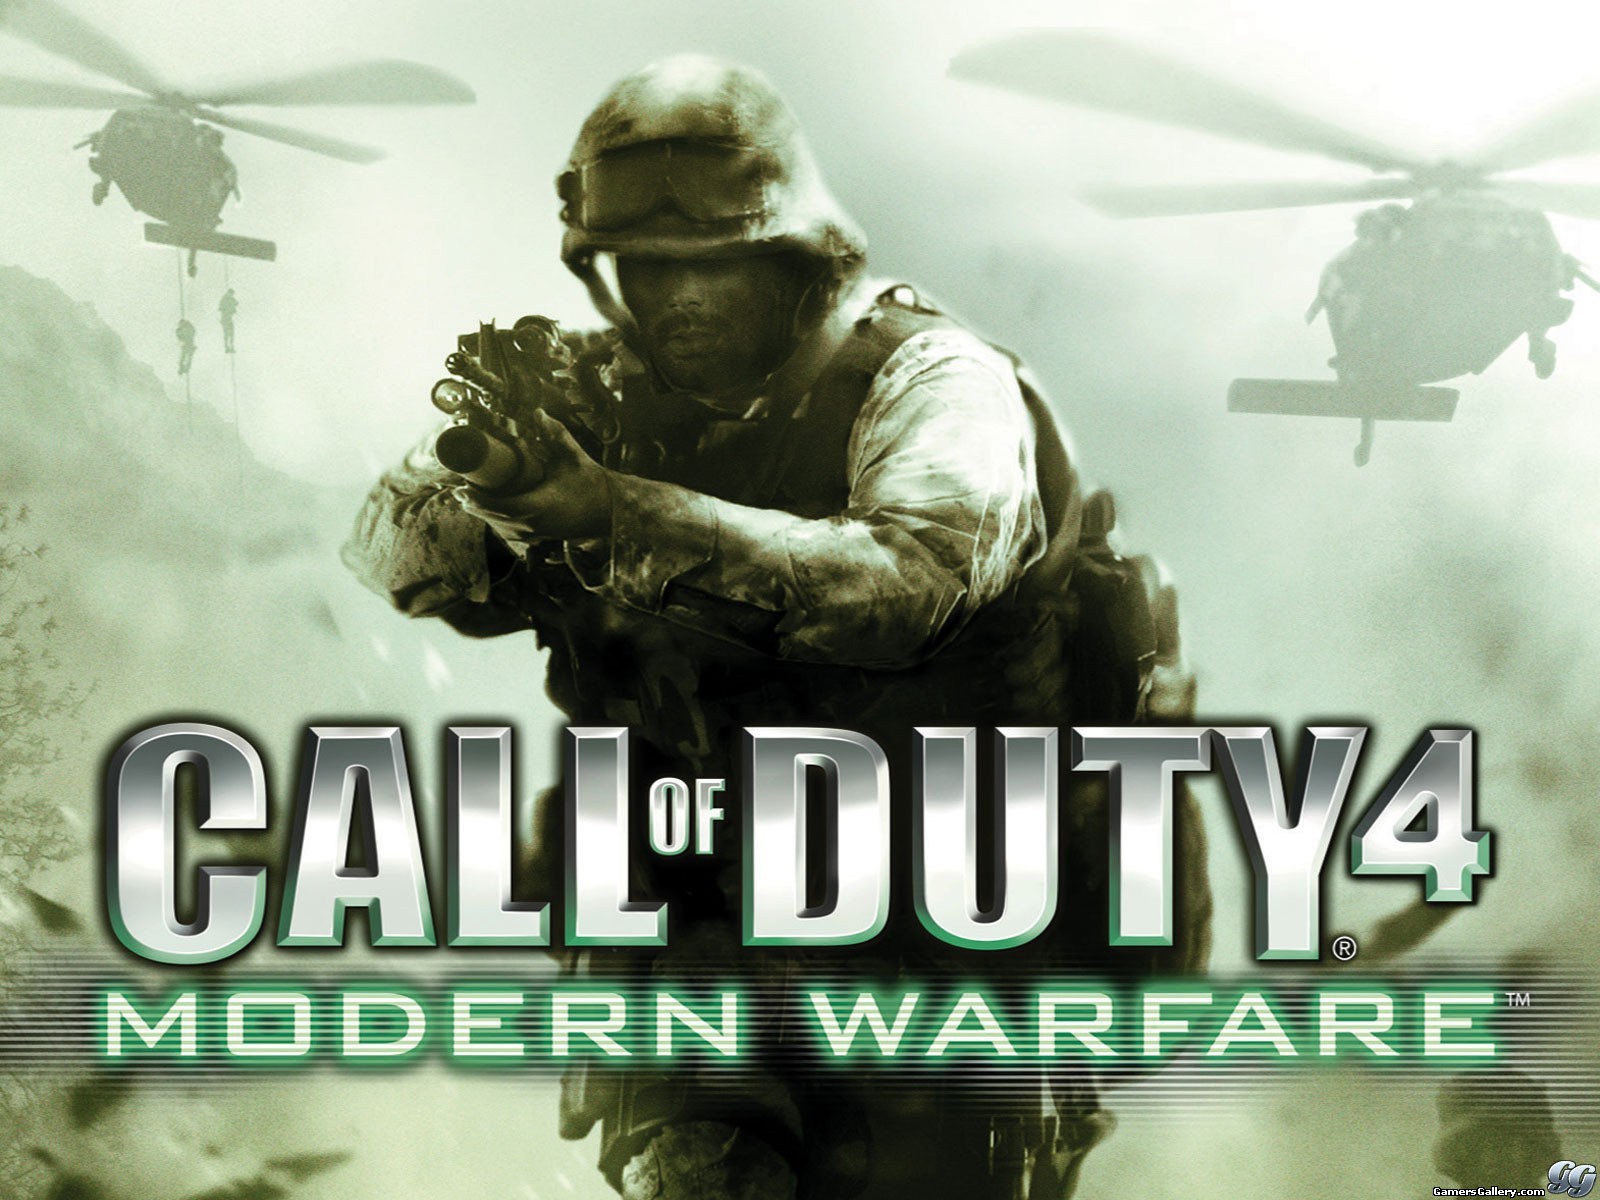 Modern warfare 2 pc download free